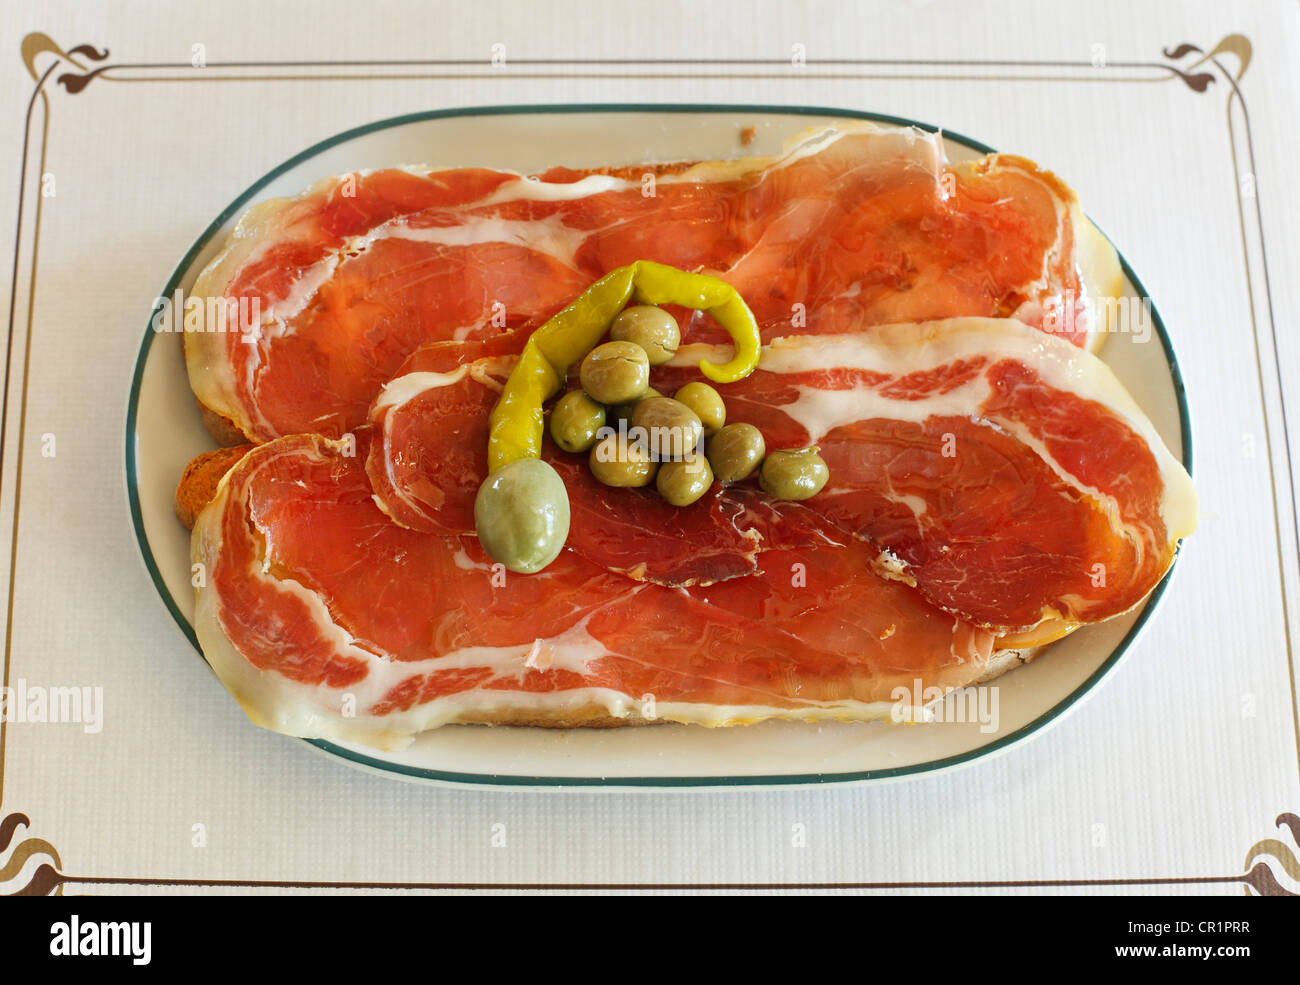 Pa amb oli con jamon, bread with olive oil and ham, Majorca, Balearic Islands, Spain, Europe Stock Photo